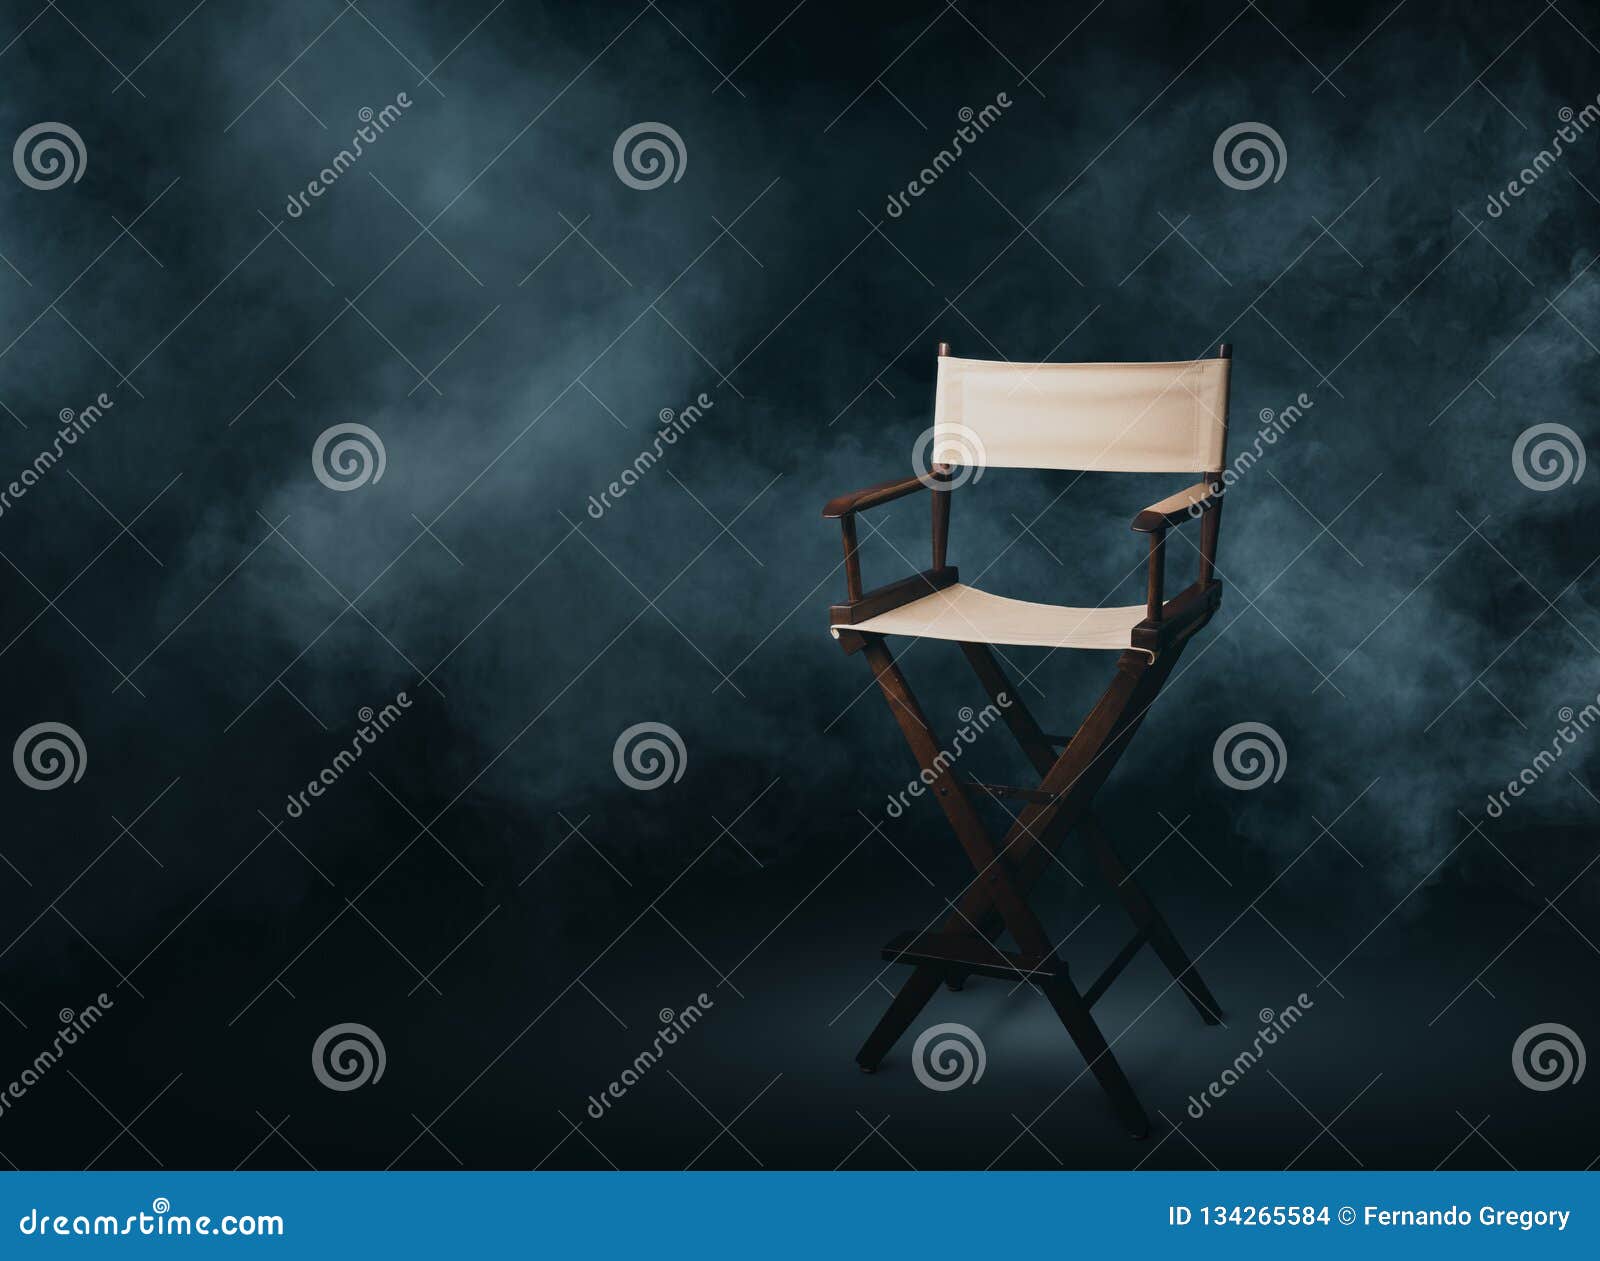 retro director chair on gray